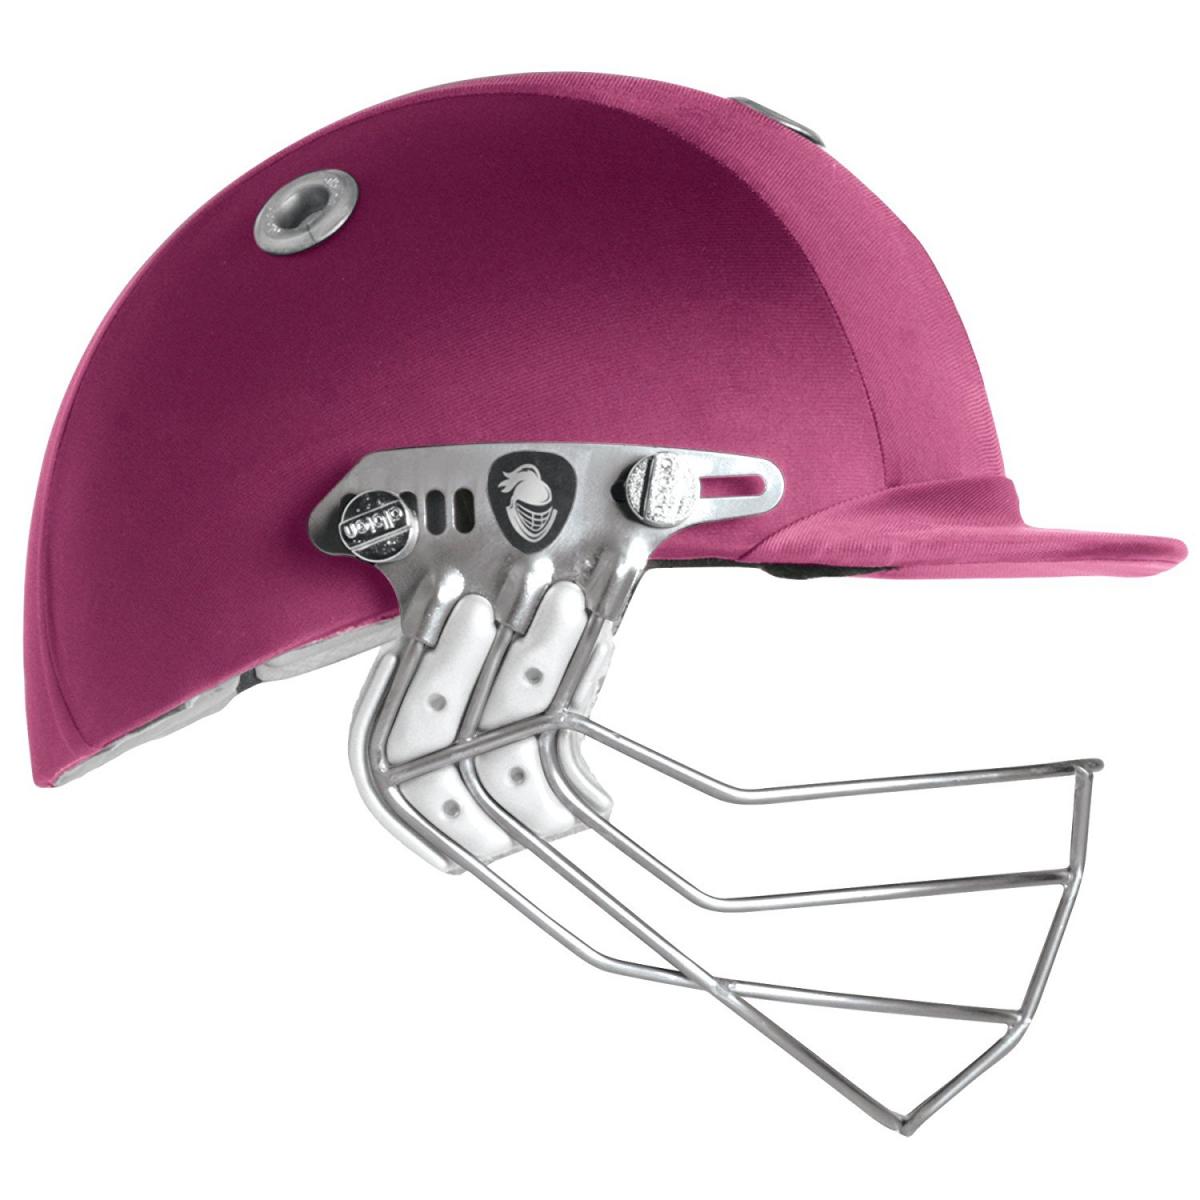 Albion Cricket Ultimate Helmet